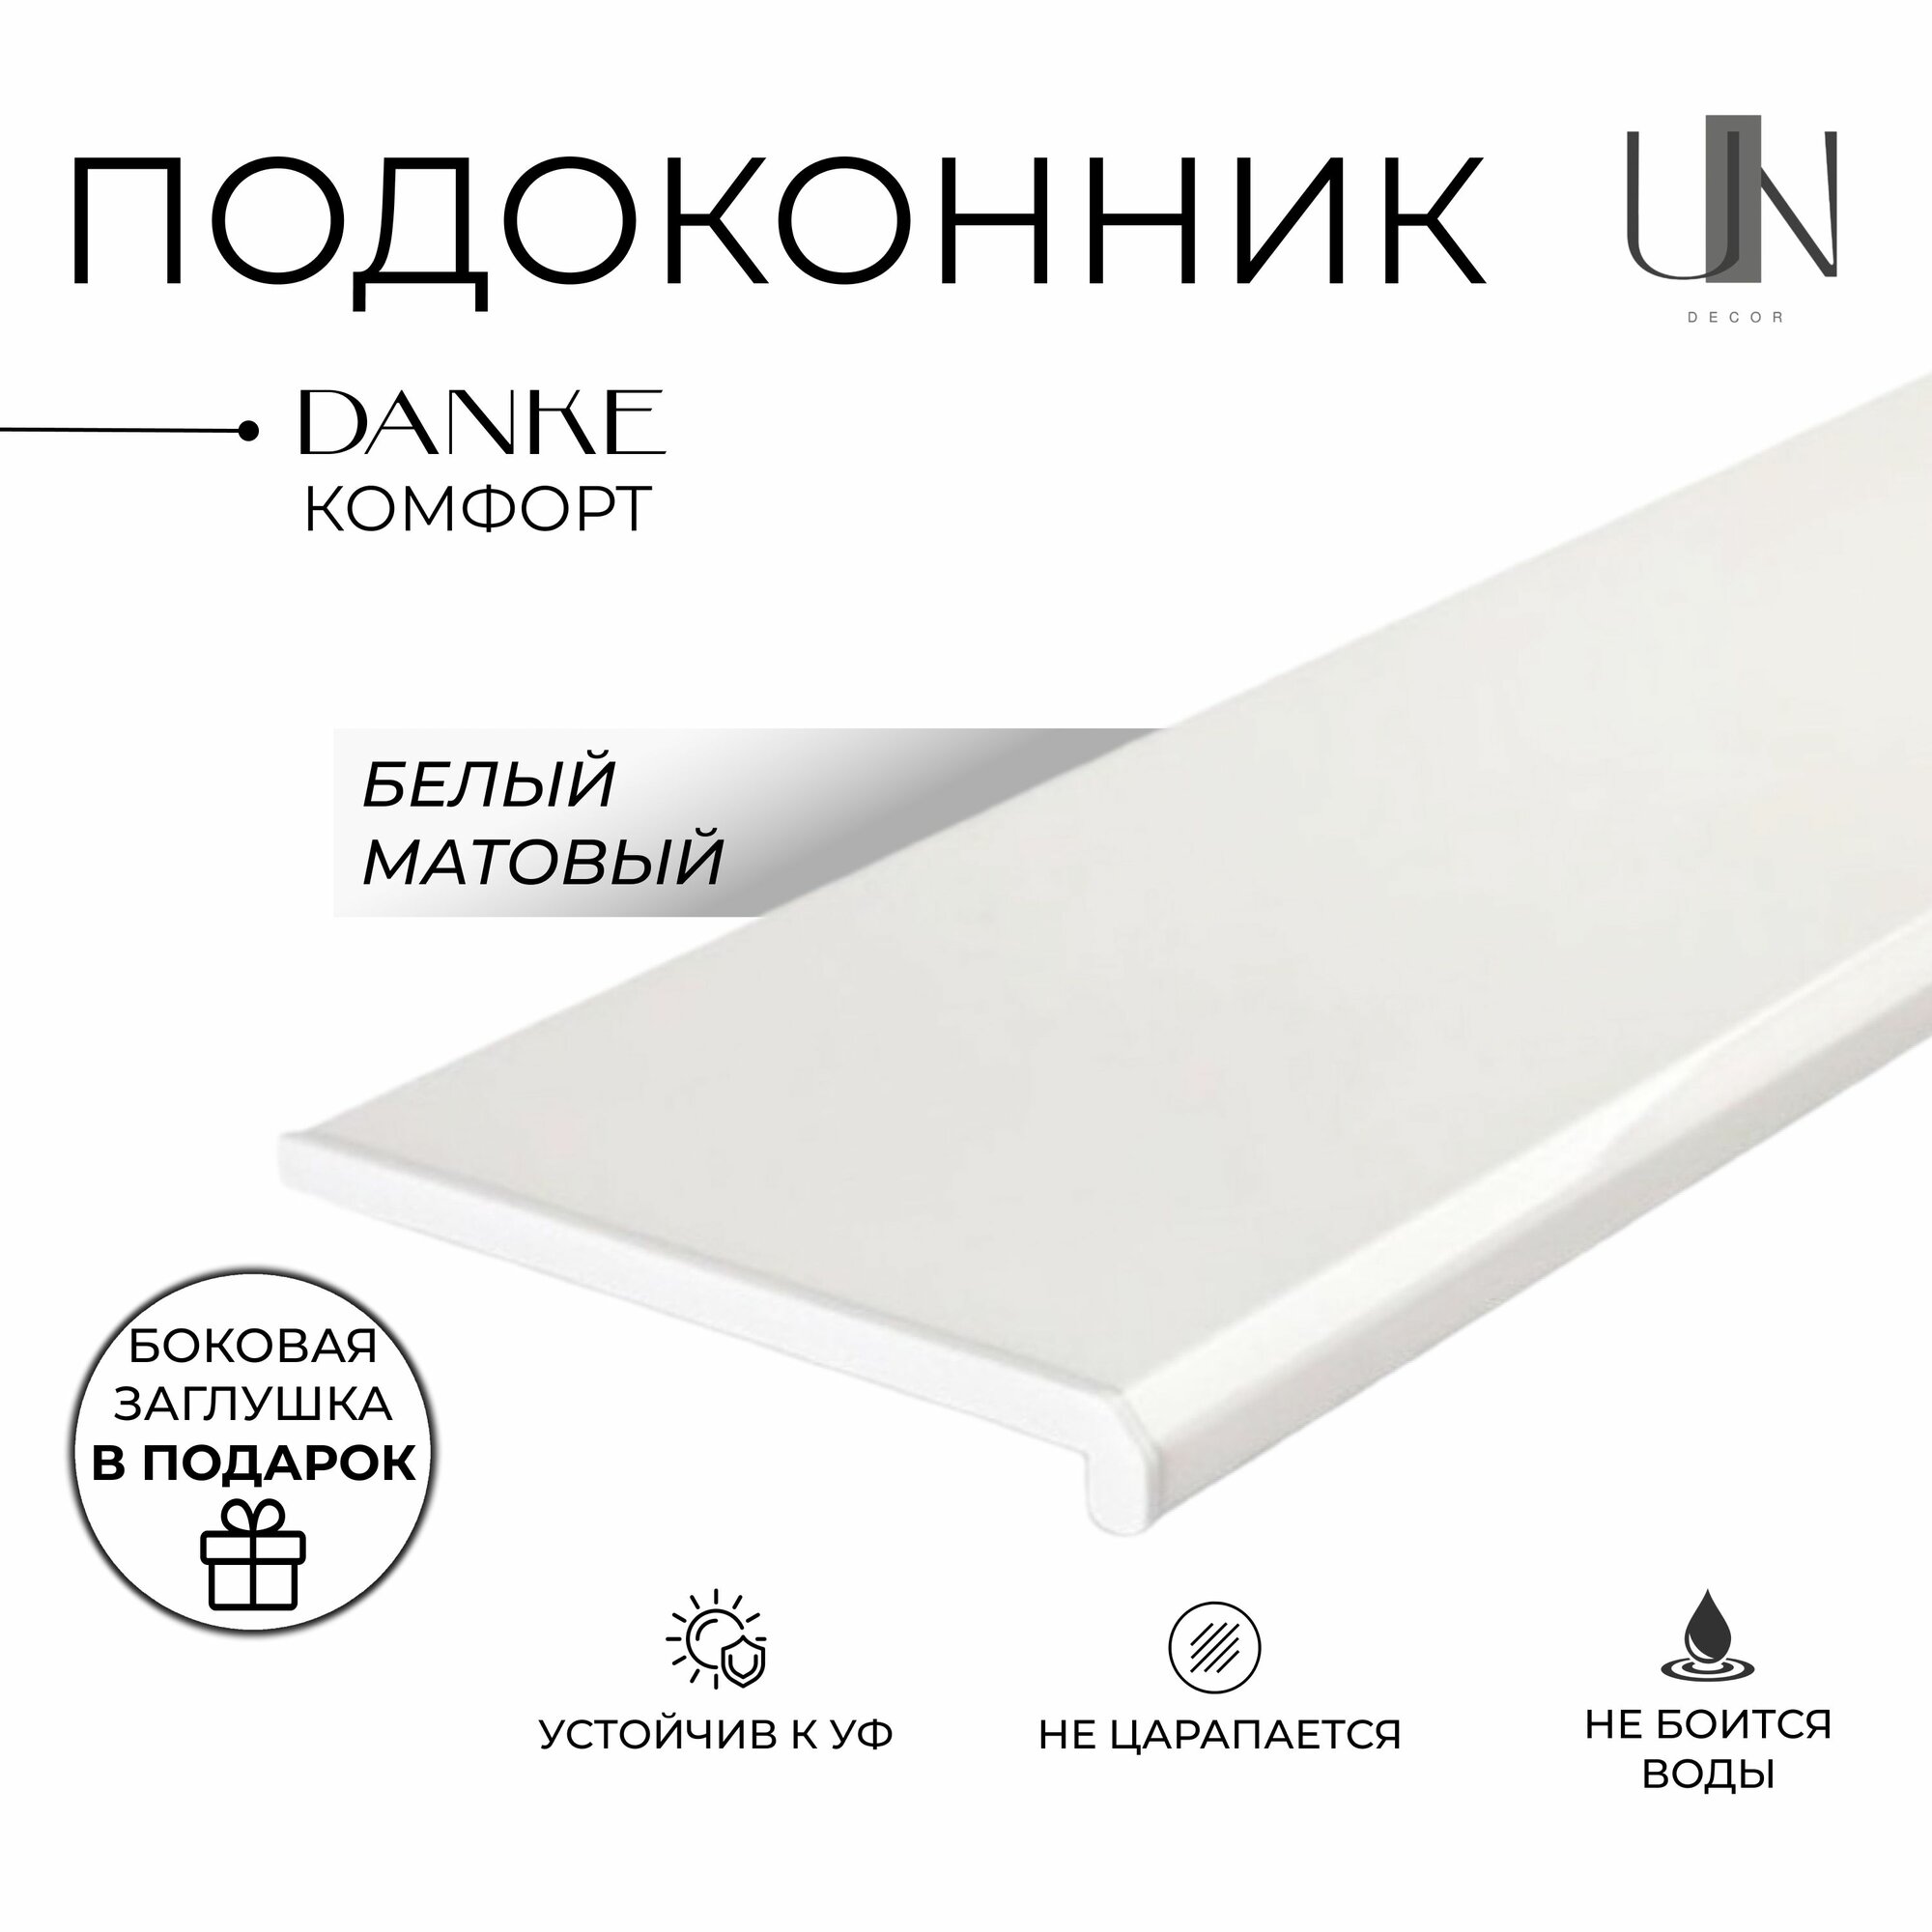 Подоконник Данке Белый матовый, коллекция DANKE KOMFORT 35 см х 0,7 м. пог.(350мм*700 мм)